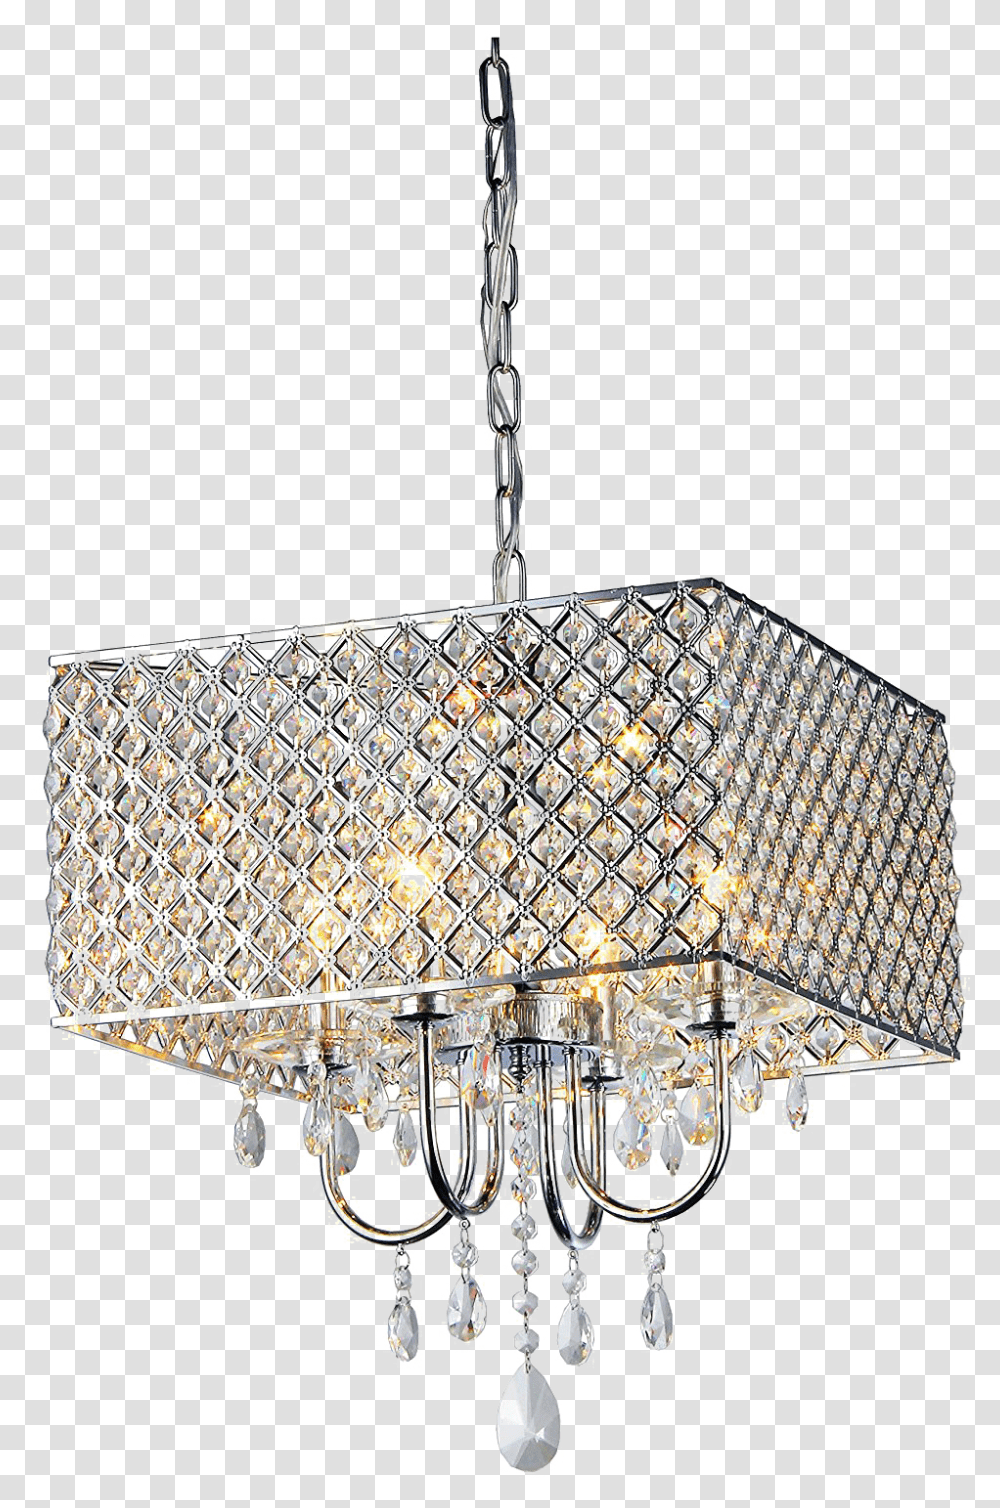 Hanging Chandelier Image Rectangle Chandelier Royal, Lamp, Accessories, Accessory, Handbag Transparent Png